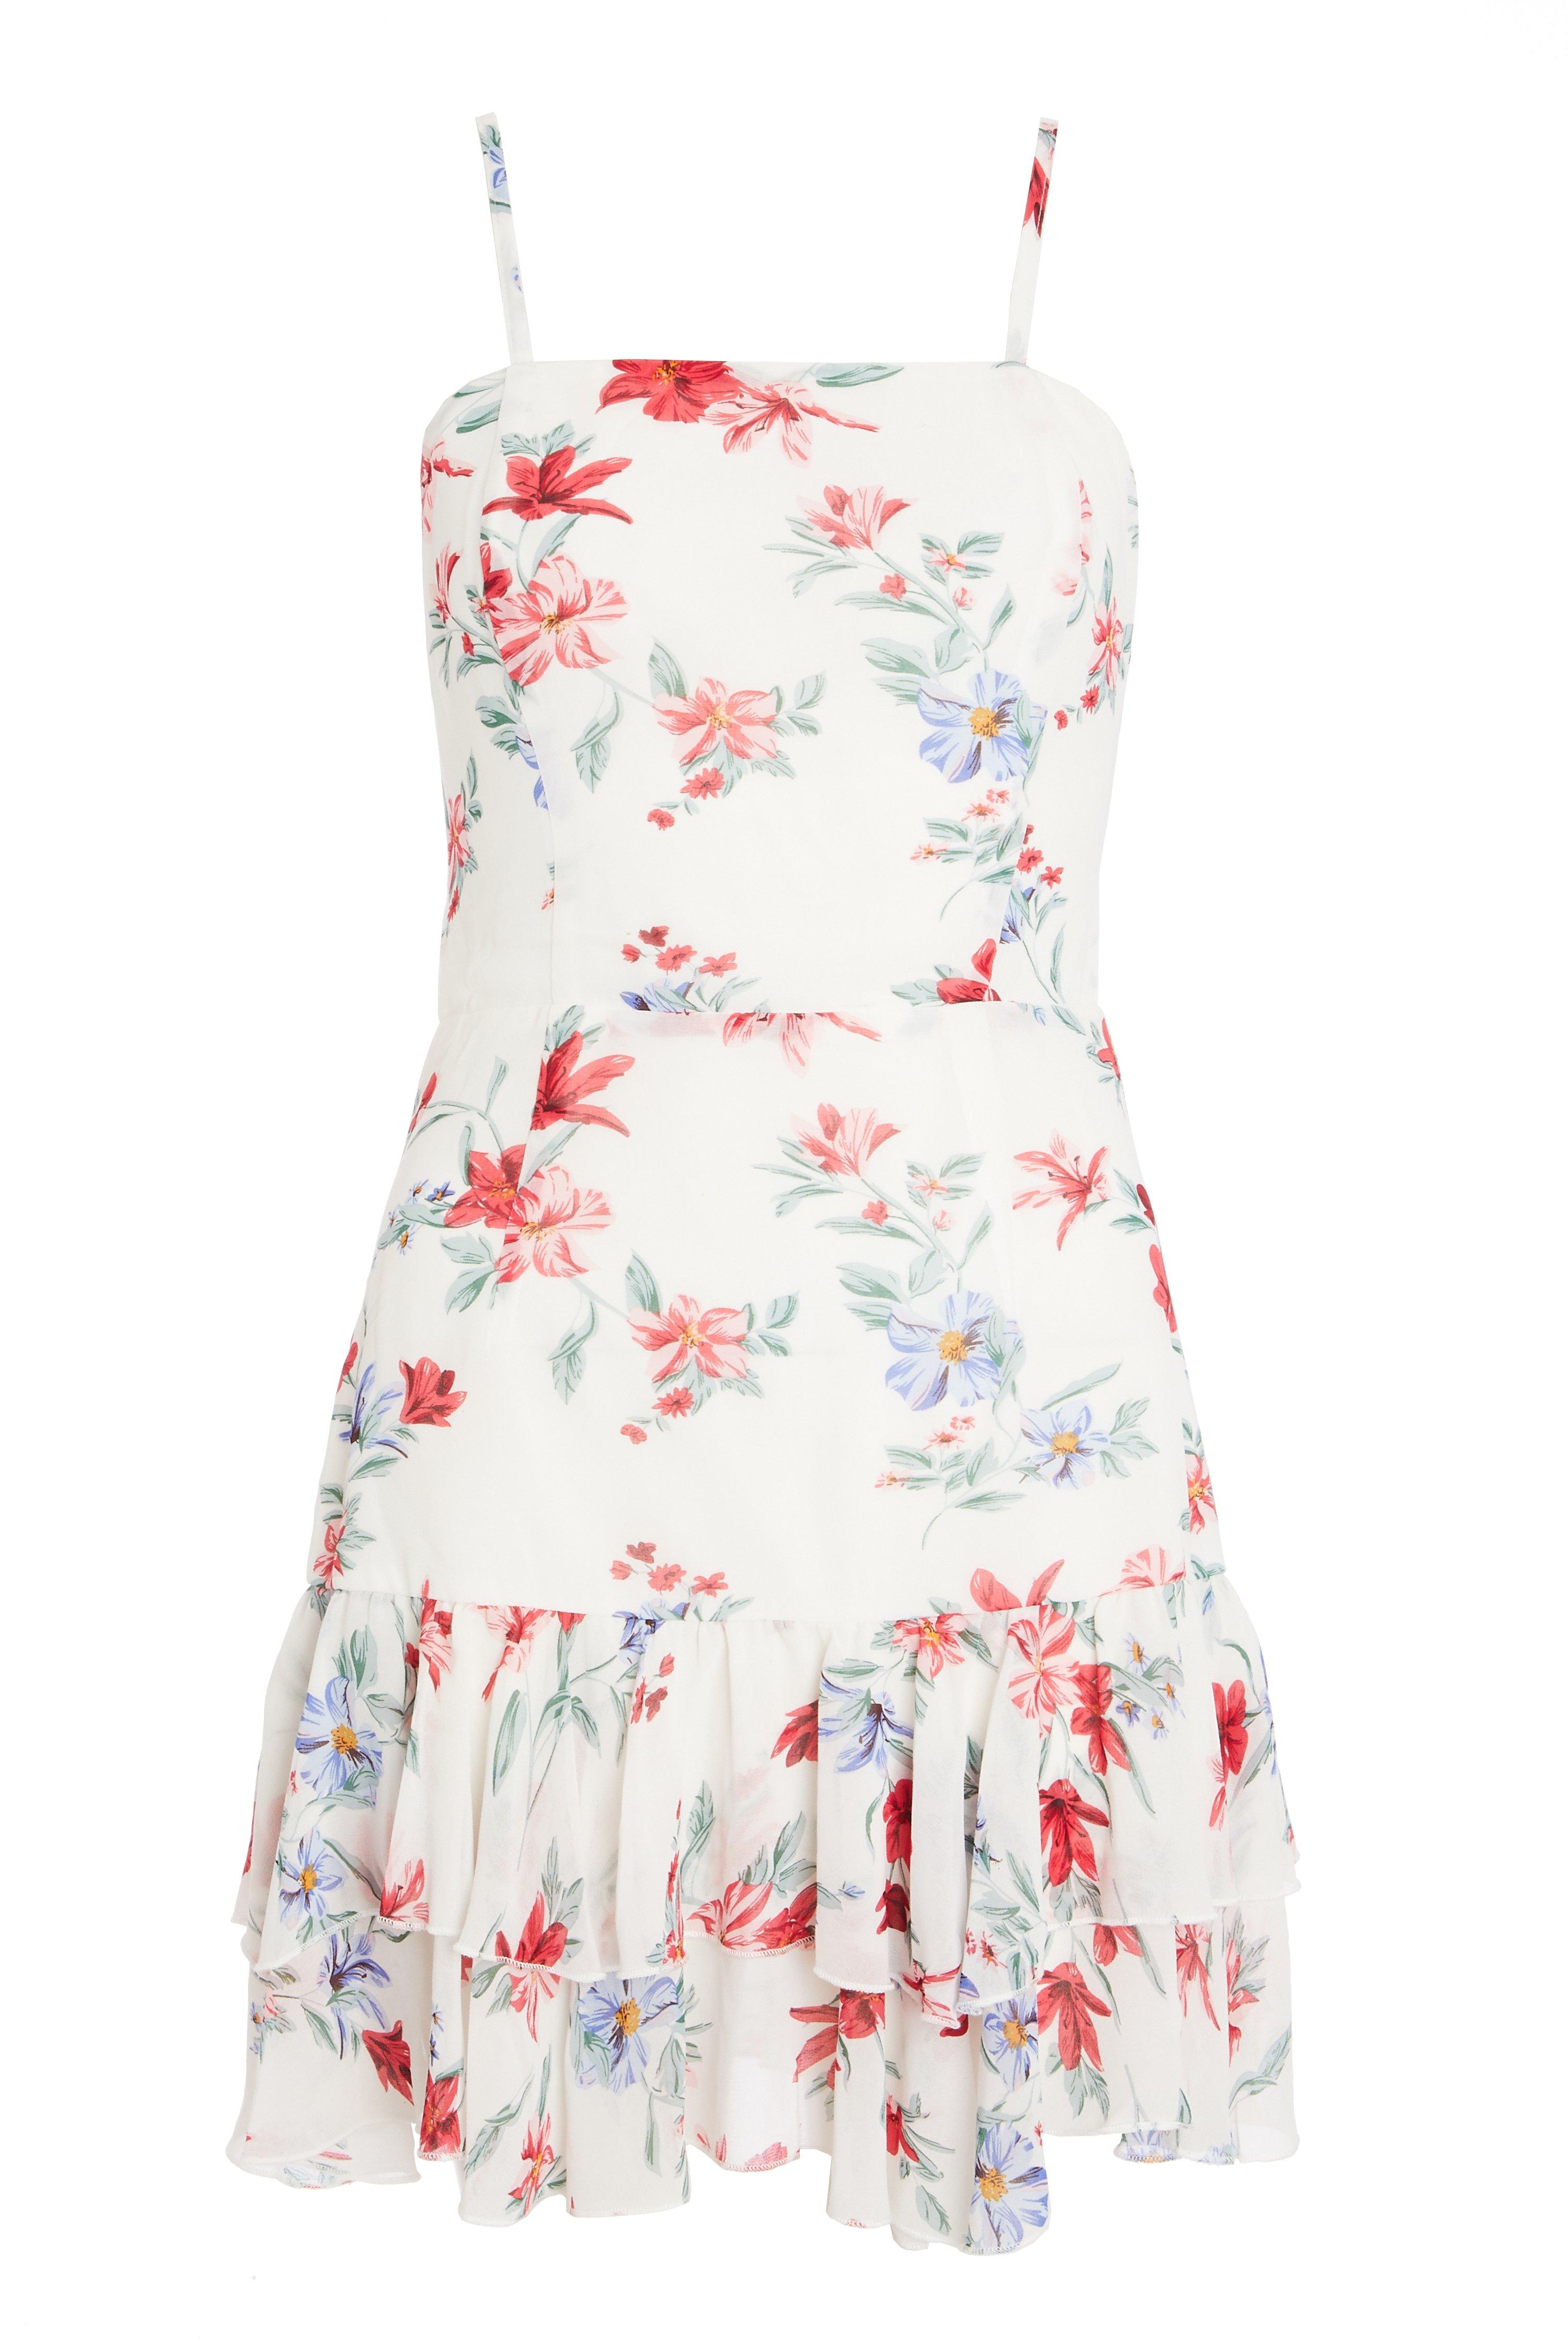 White Chiffon Floral Dress - Quiz Clothing